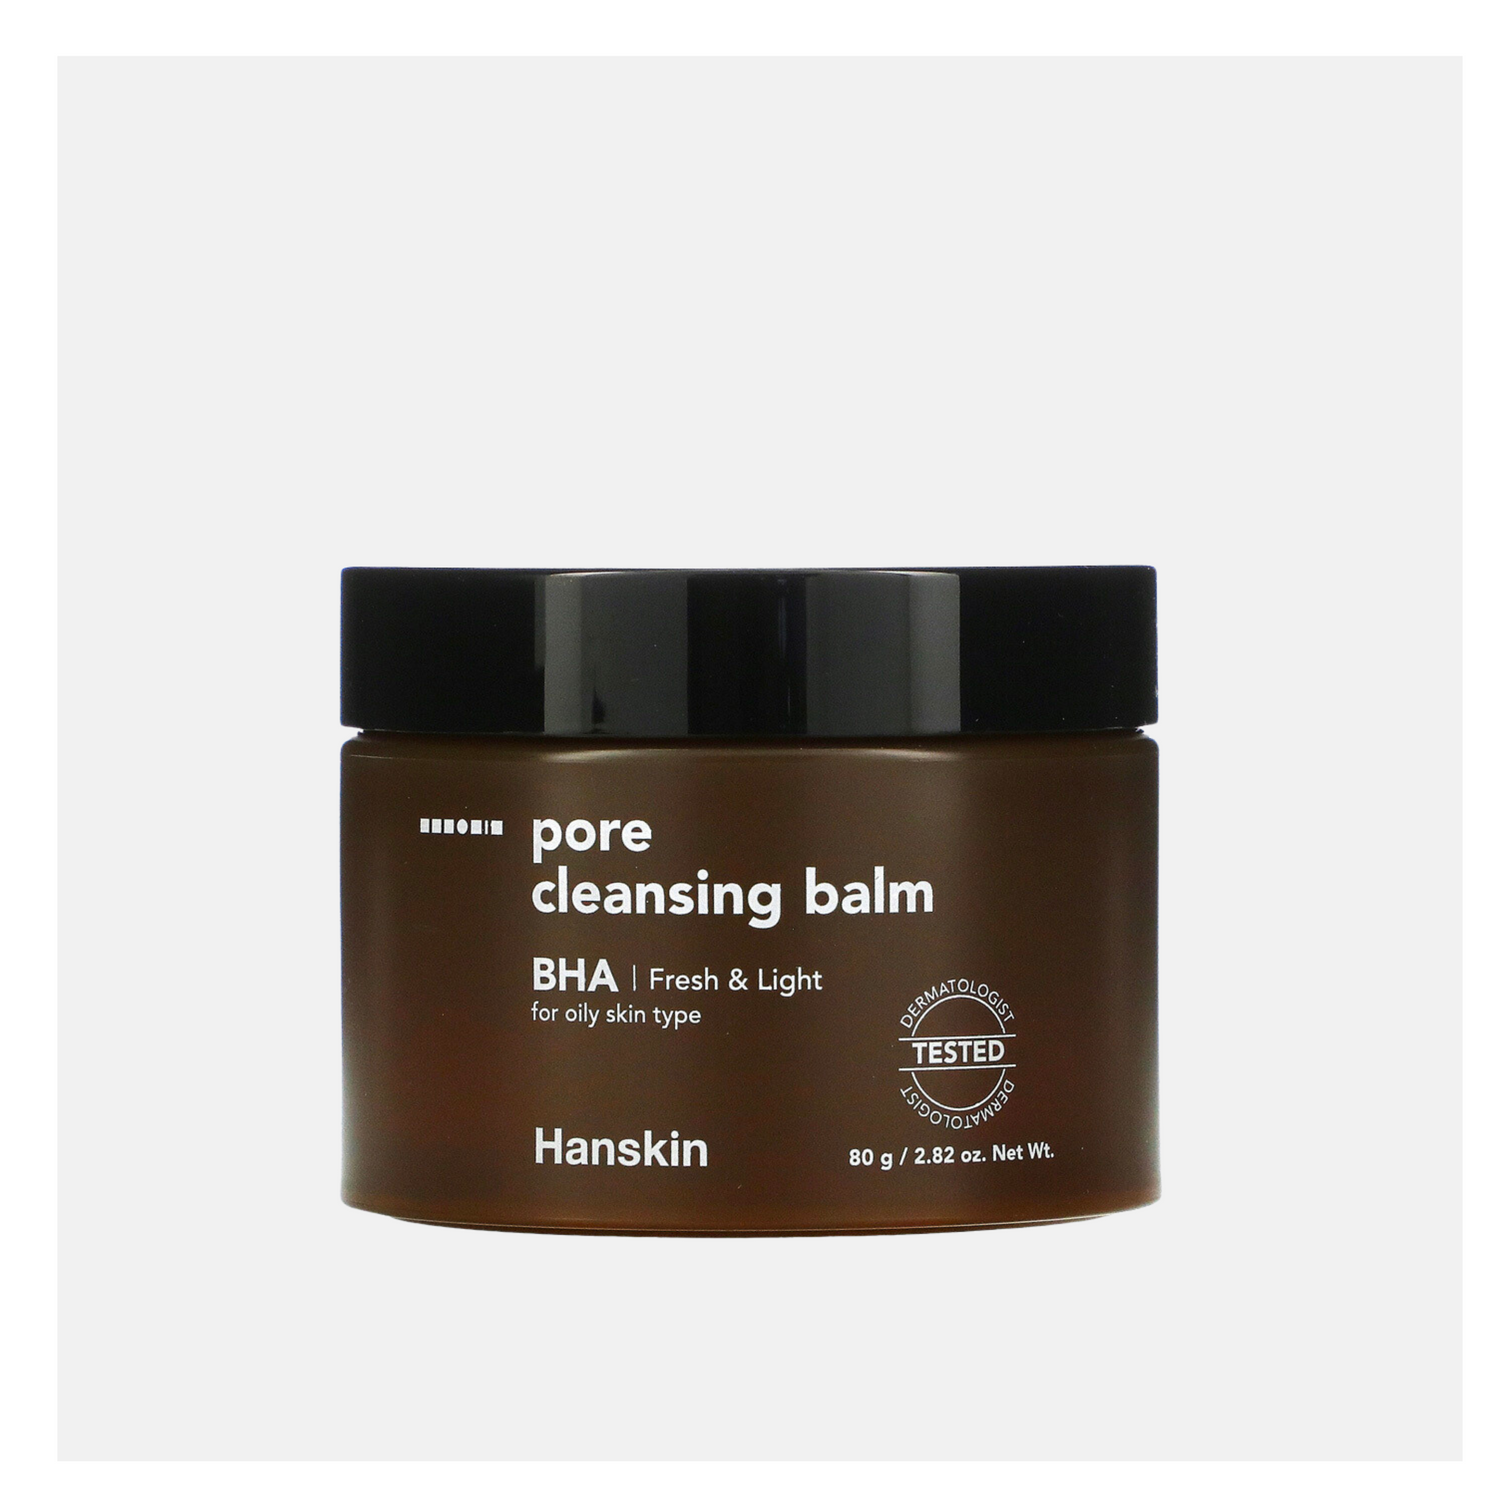 HANSKIN Pore Cleansing Balm BHA, 80g